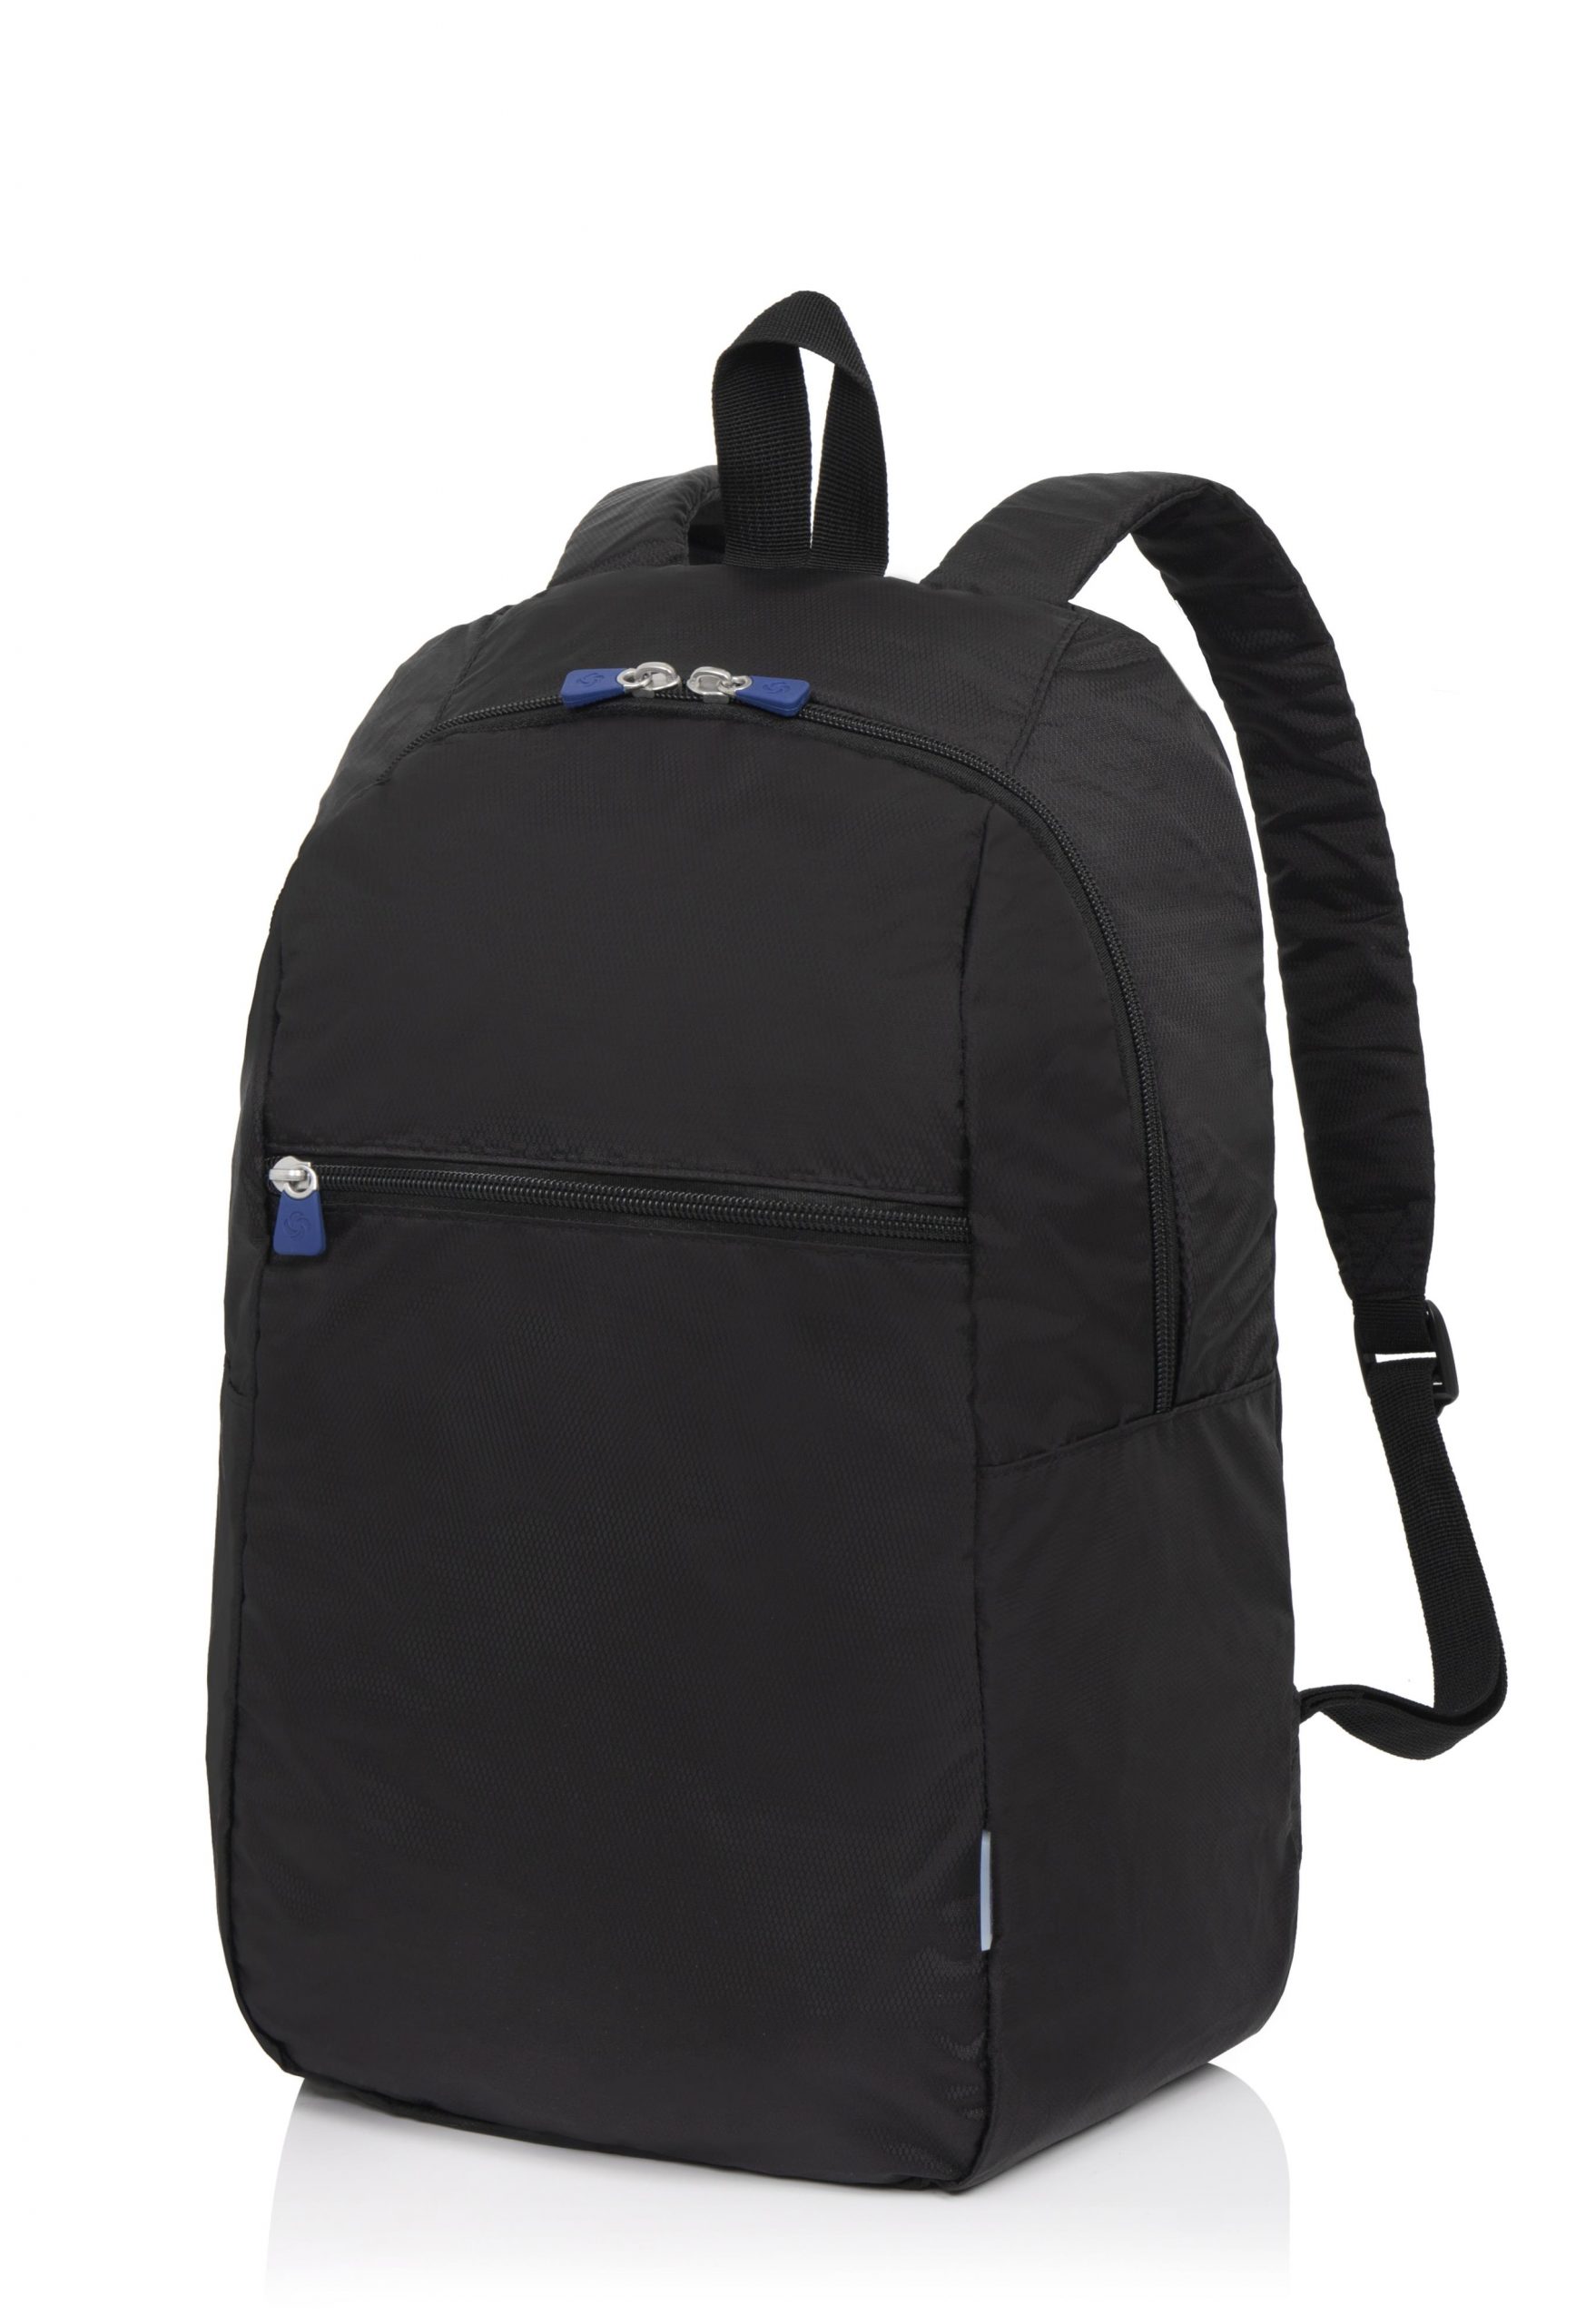 Samsonite TRAVEL ESSENTIALS Foldable Backpack | Samsonite Qatar